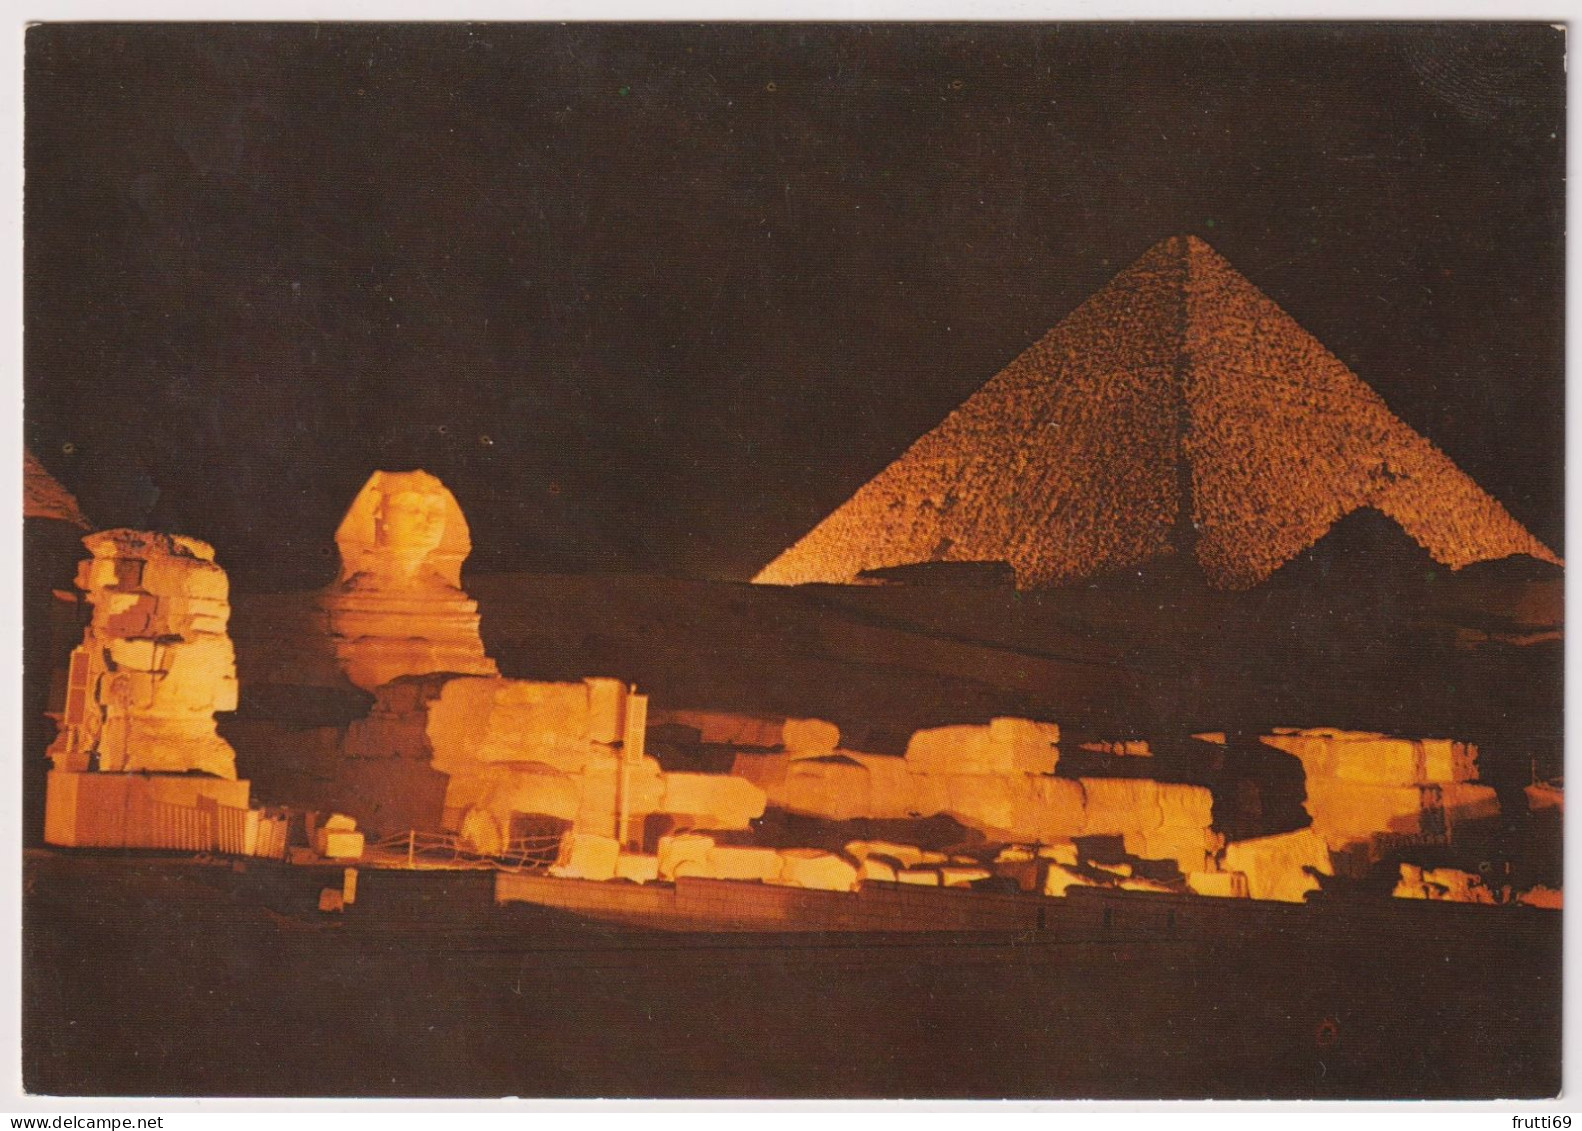 AK 198185 EGYPT - Giza - Sound And Light At The Pyramids Of Giza - Pyramides